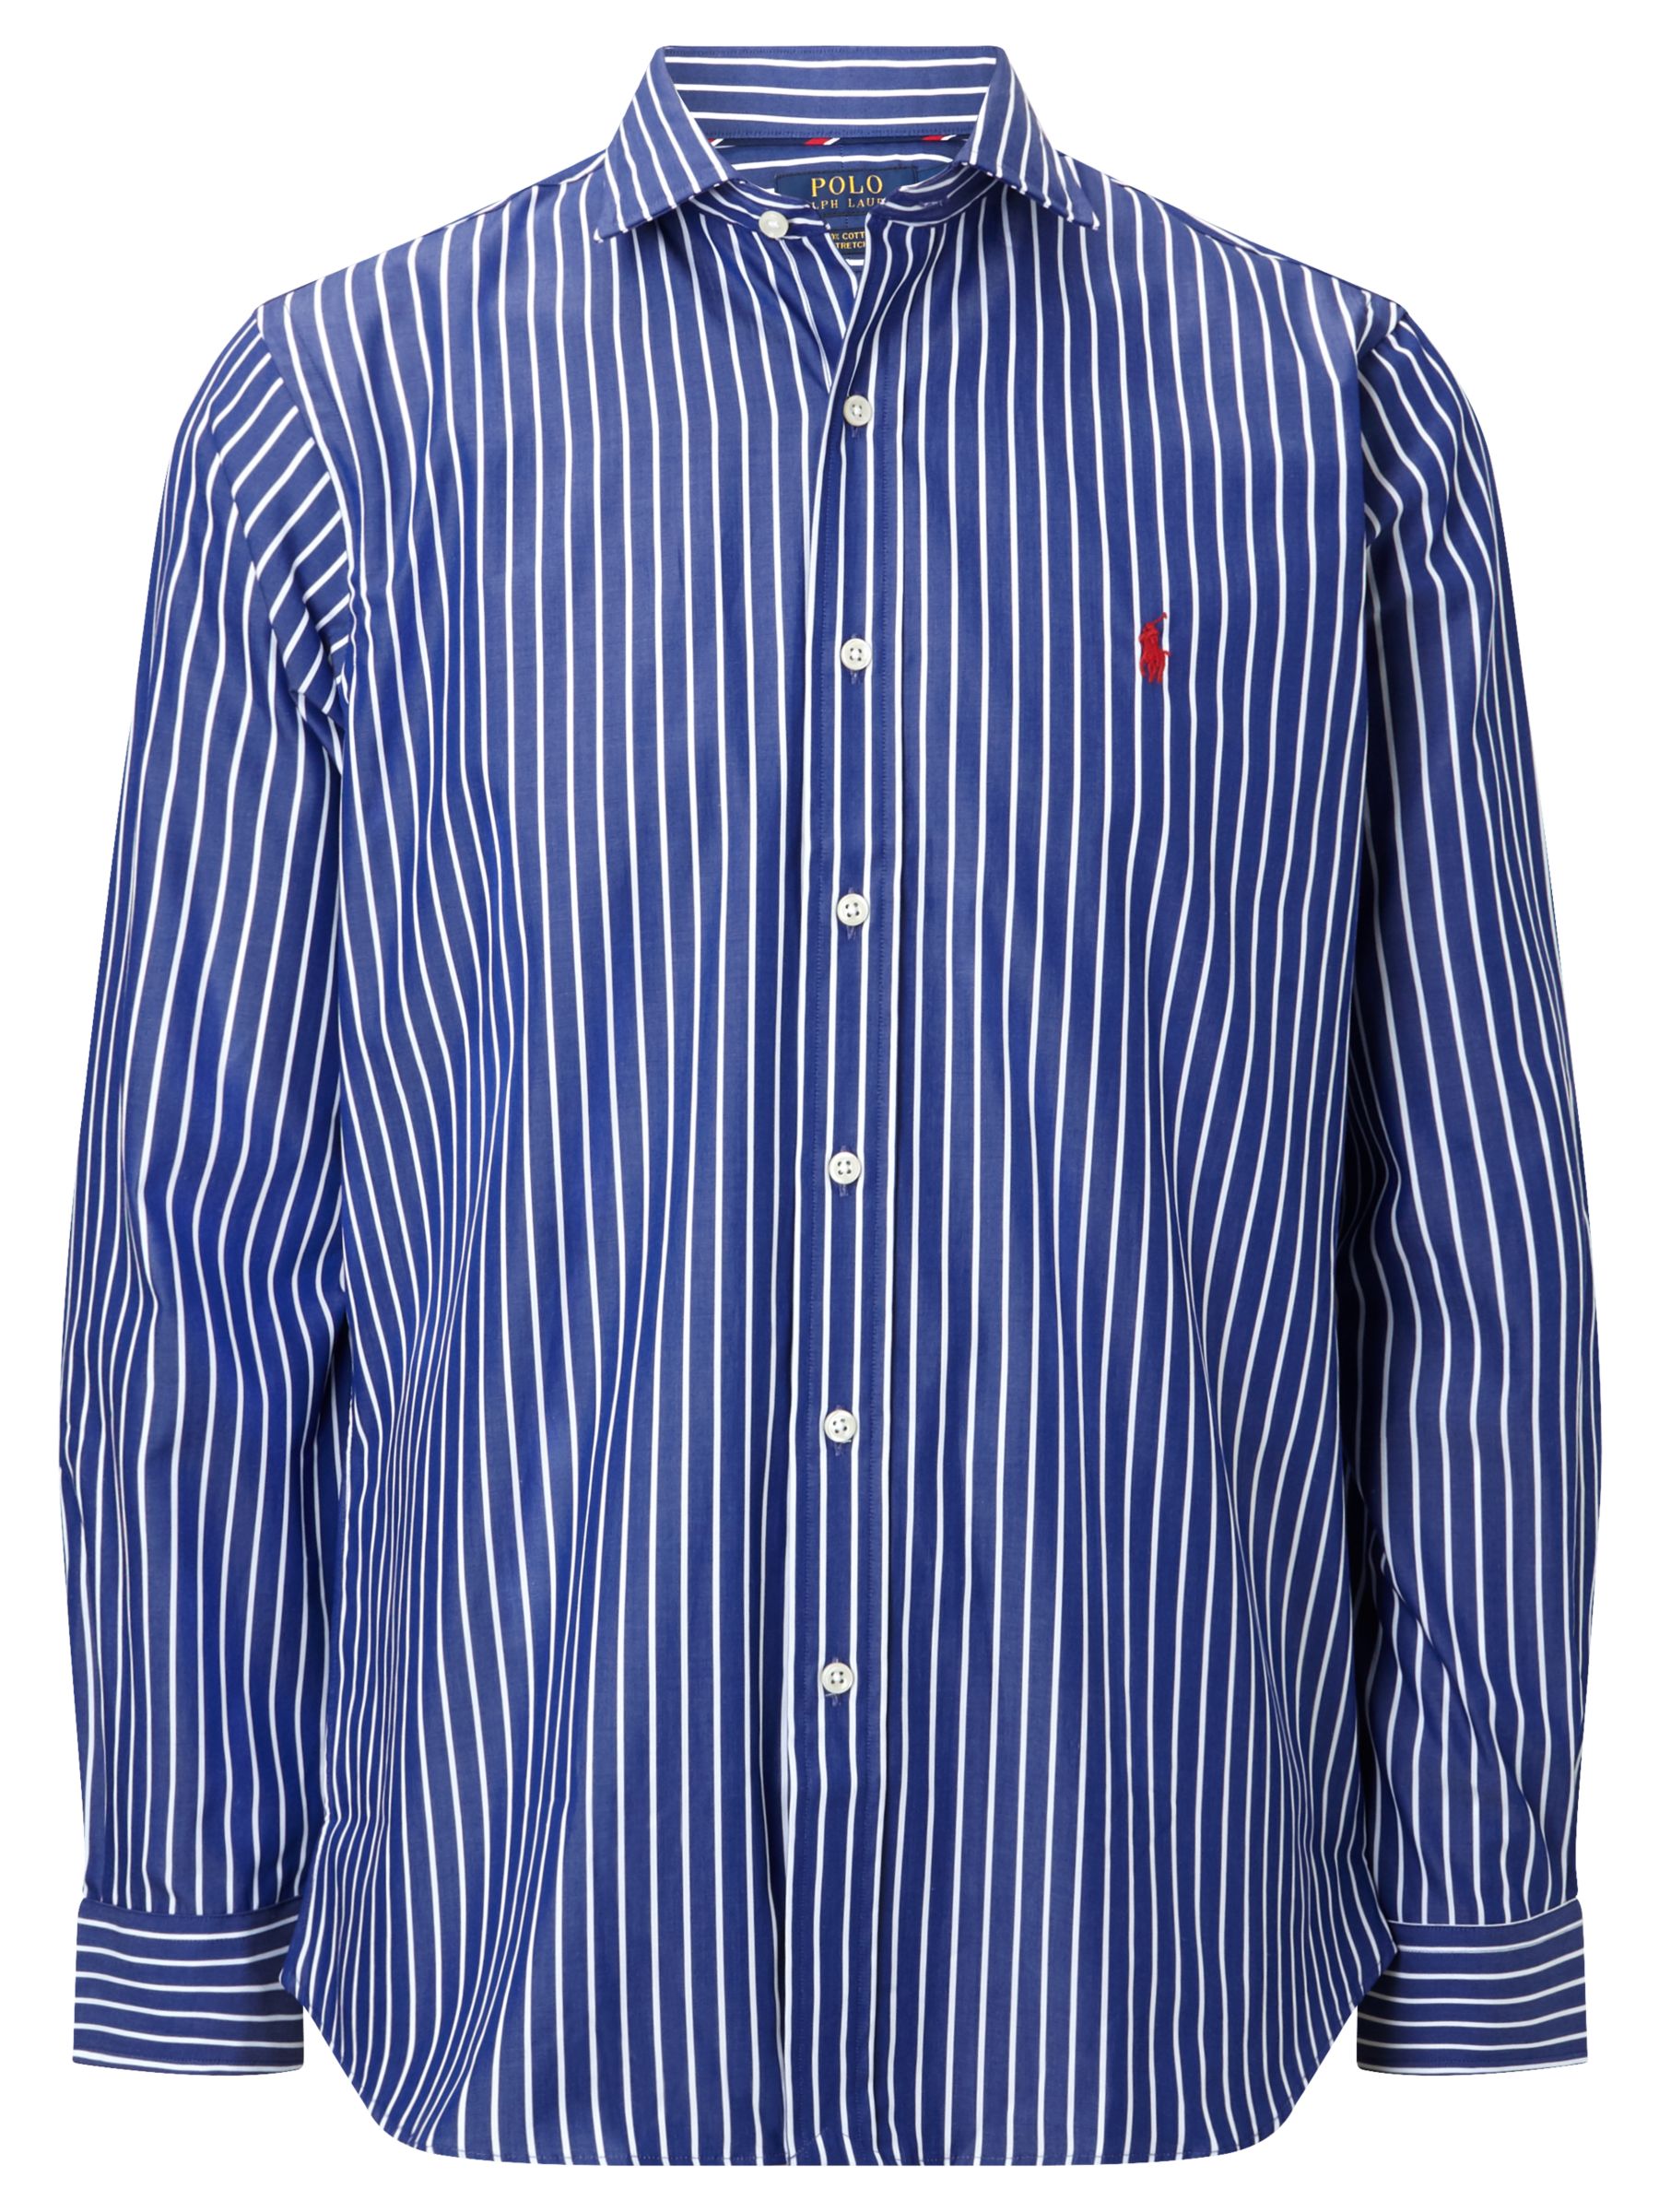 Polo Ralph Lauren Striped Shirt, Blue/White at John Lewis & Partners